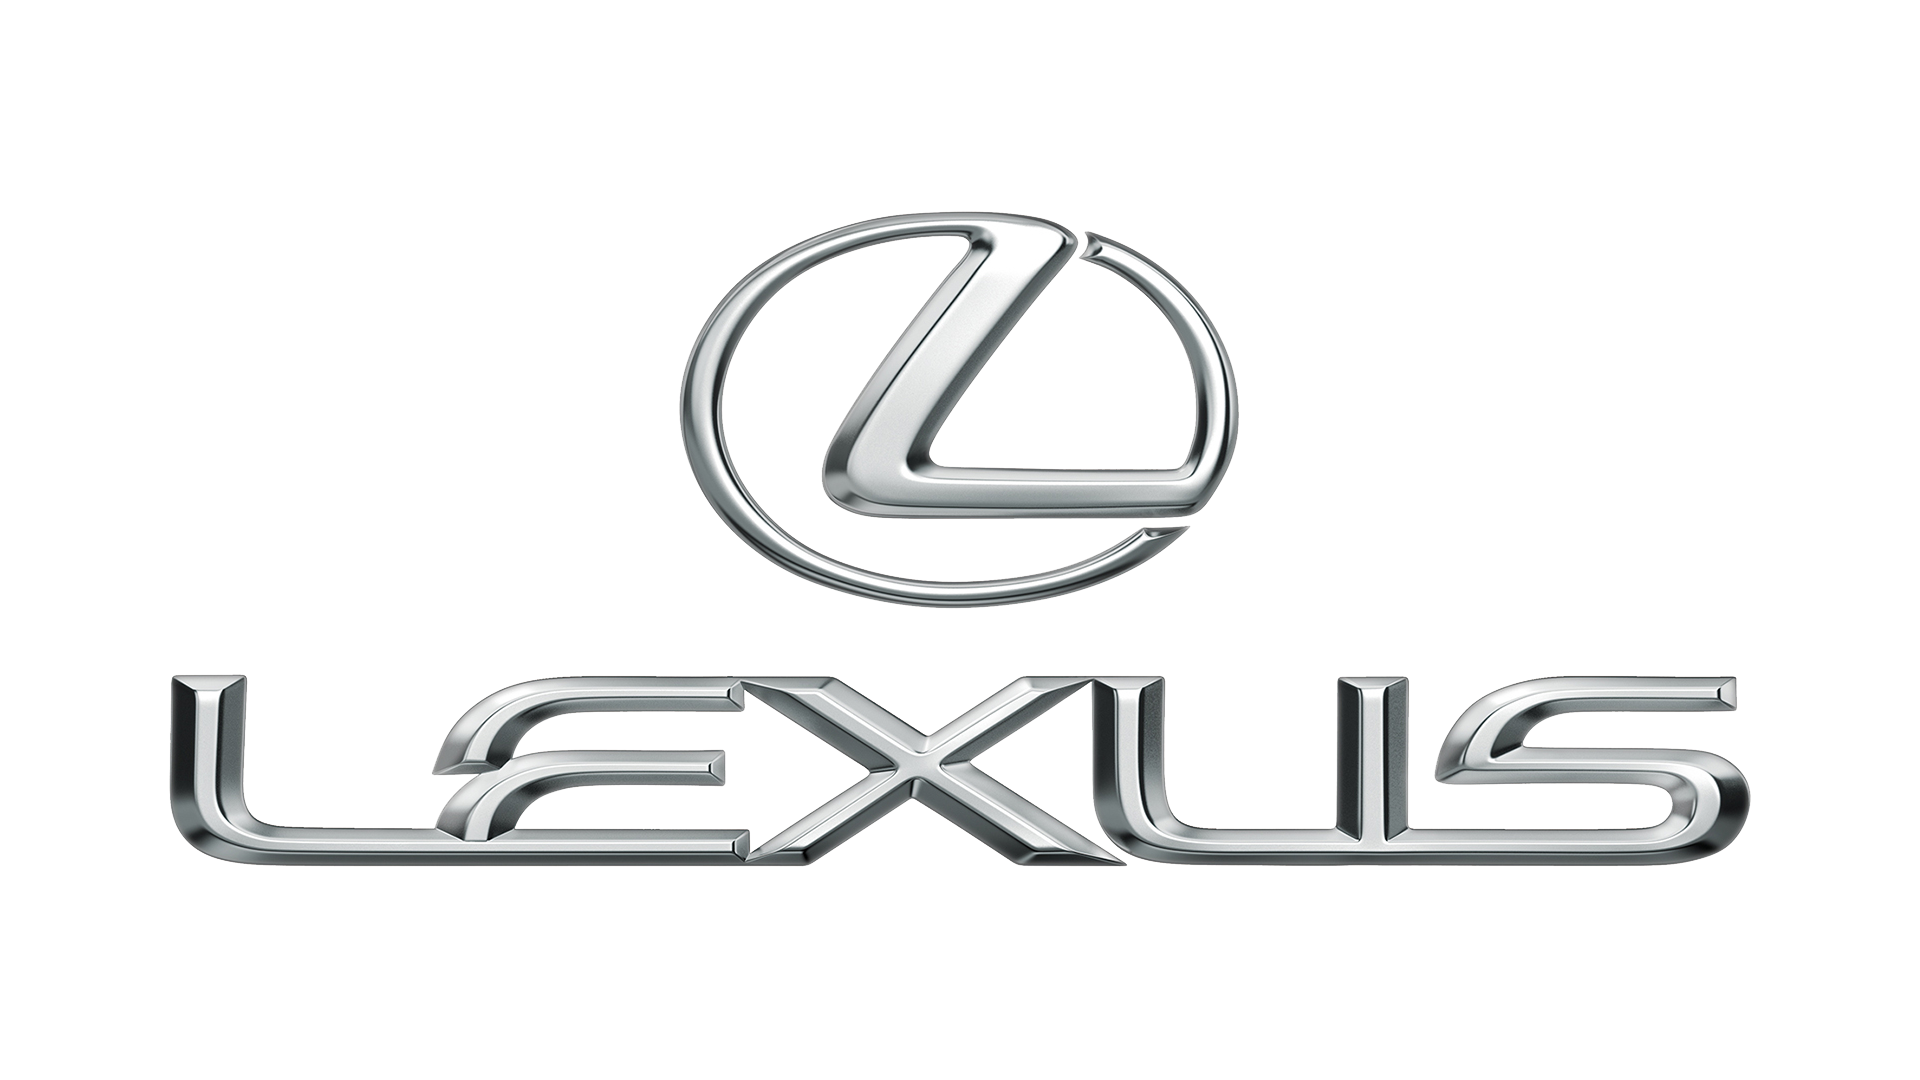 Lexus-Logo